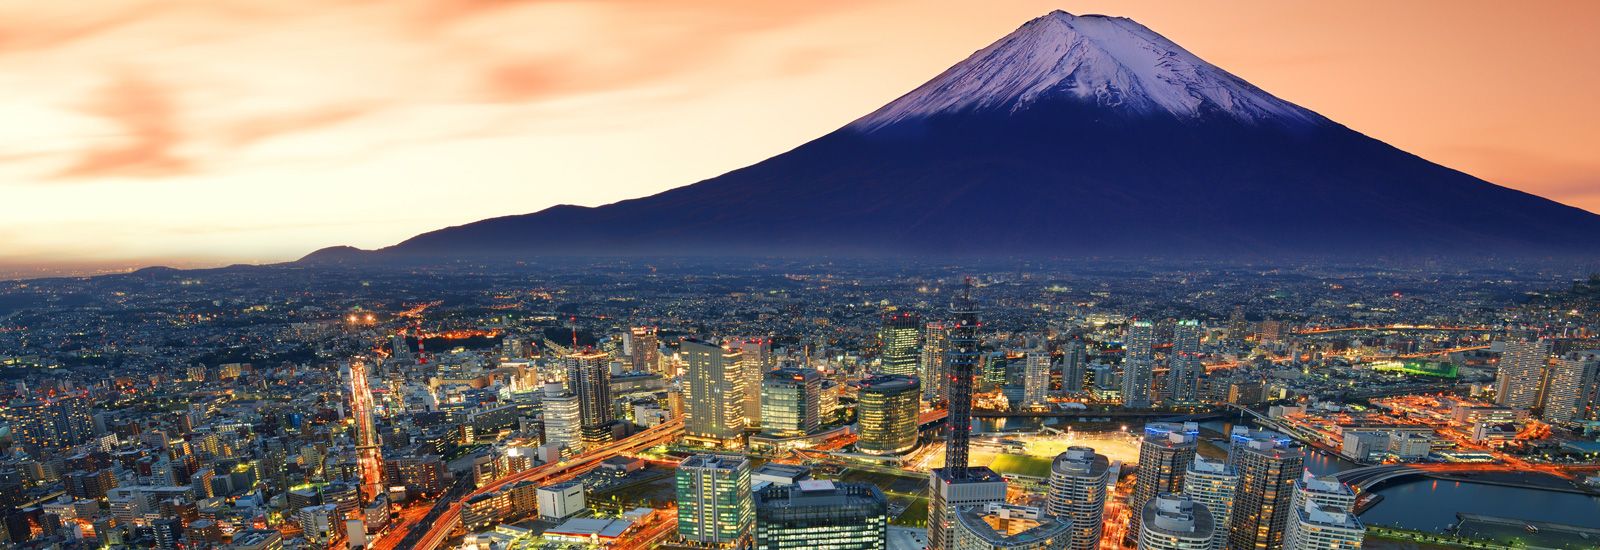 Mount Fuji and the city of Yokohama.